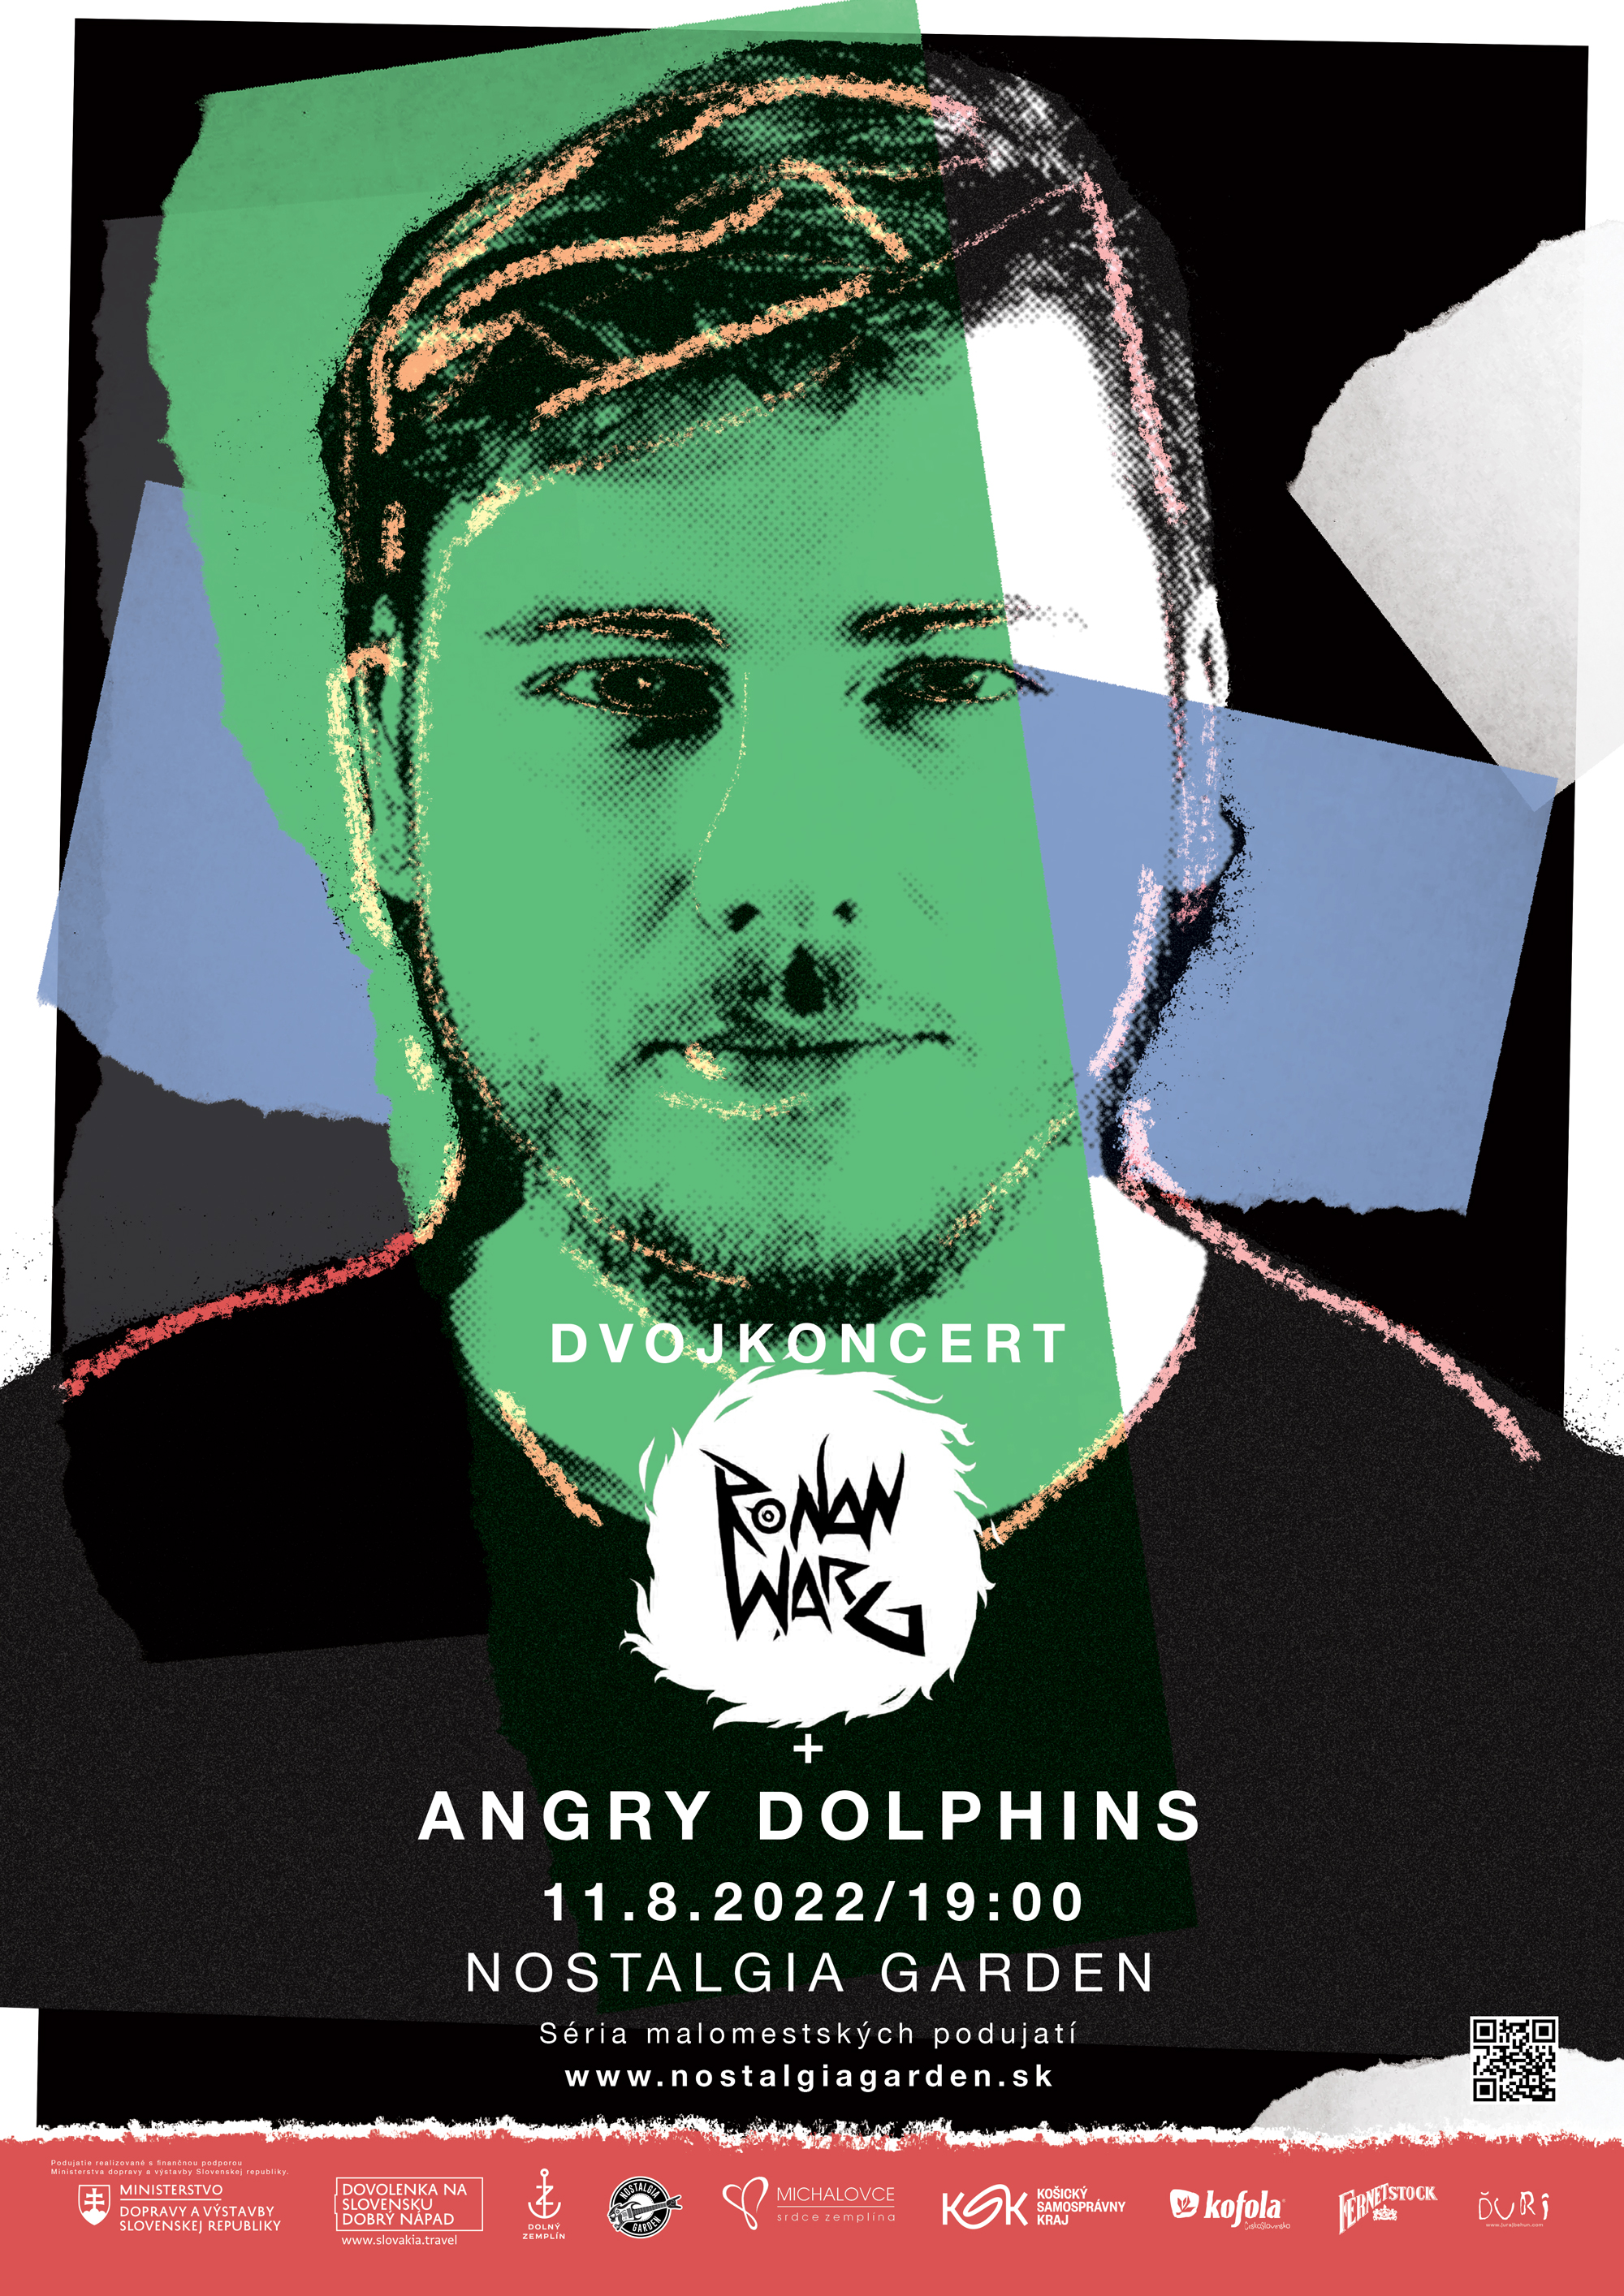 Plagát pre Ronan Warg + Angry Dolphins